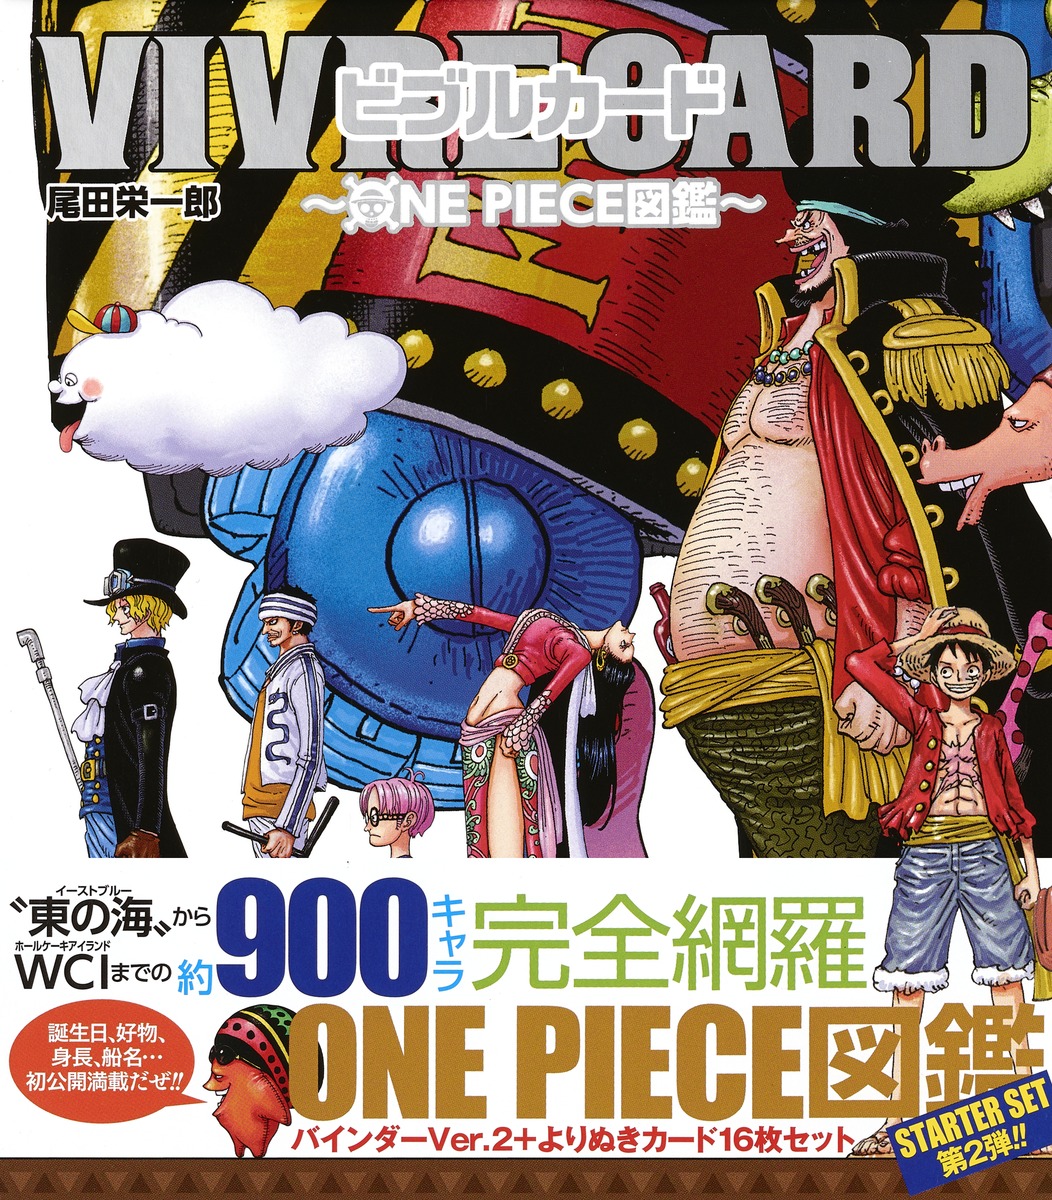 Vivre Card One Piece図鑑 Starter Set Vol 2 尾田 栄一郎 集英社の本 公式